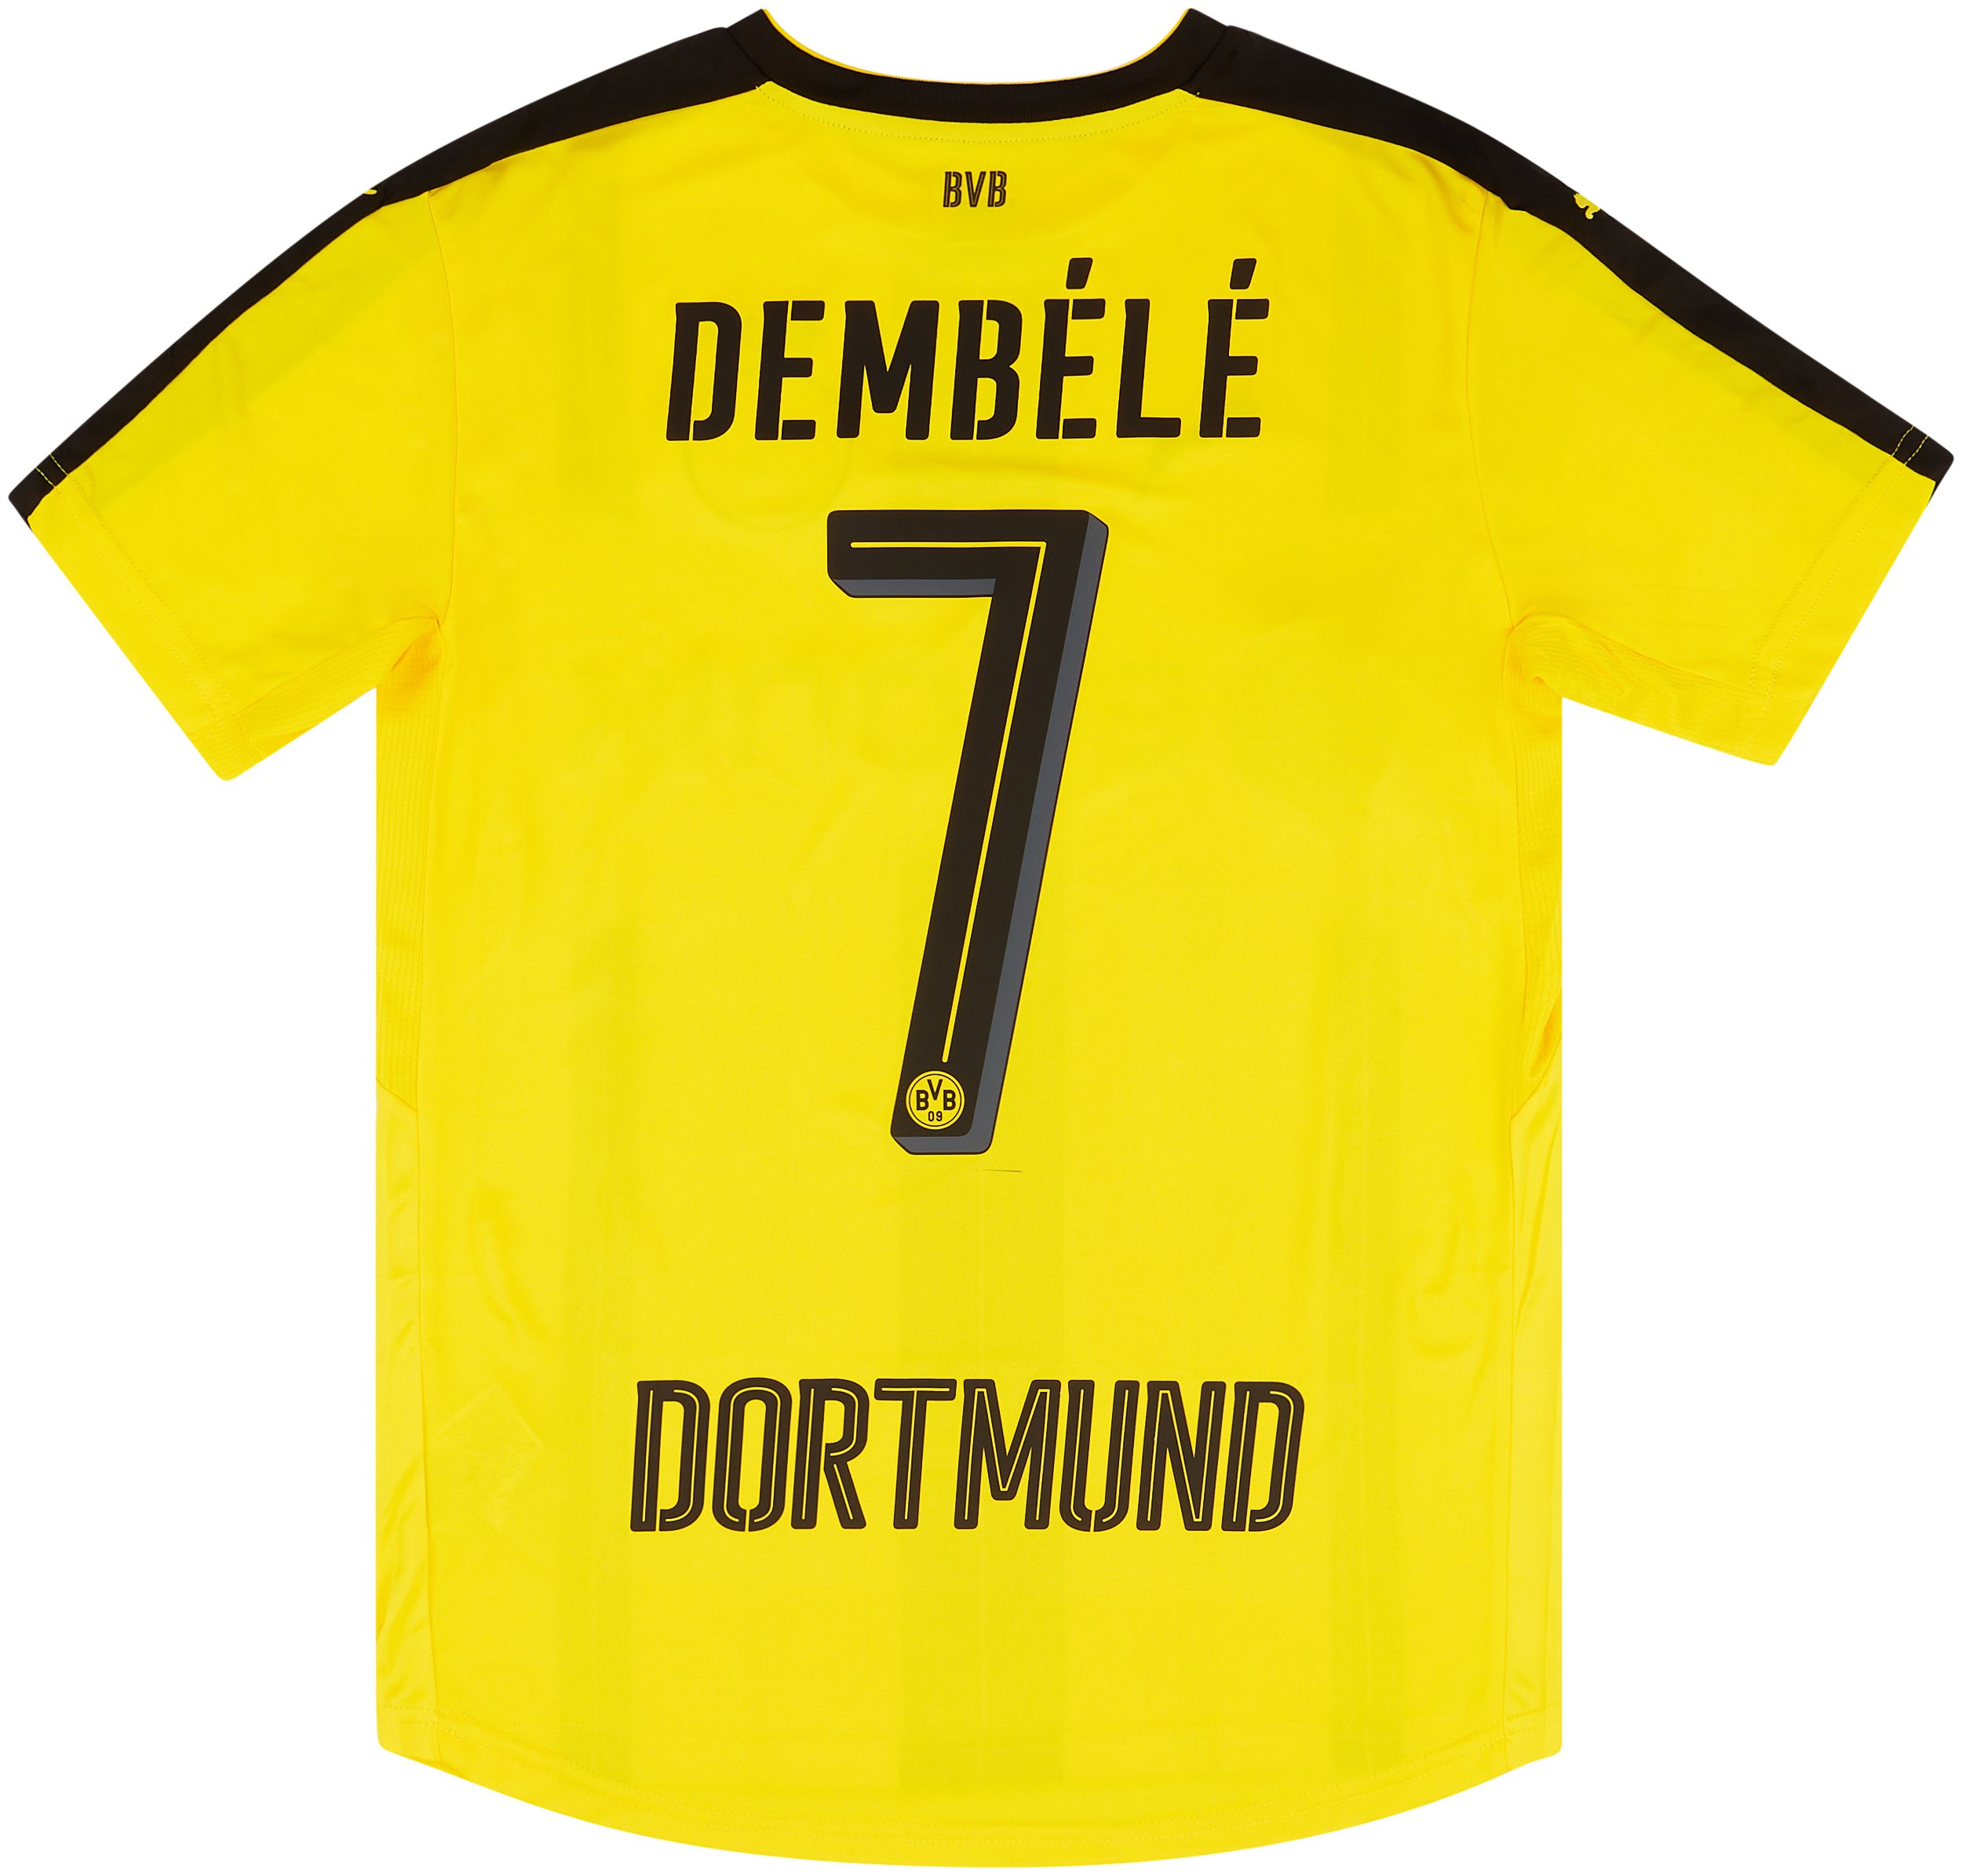 Tottenham Hotspur 2016-17 Home Shirt ((Excellent) L) (Dembele 19